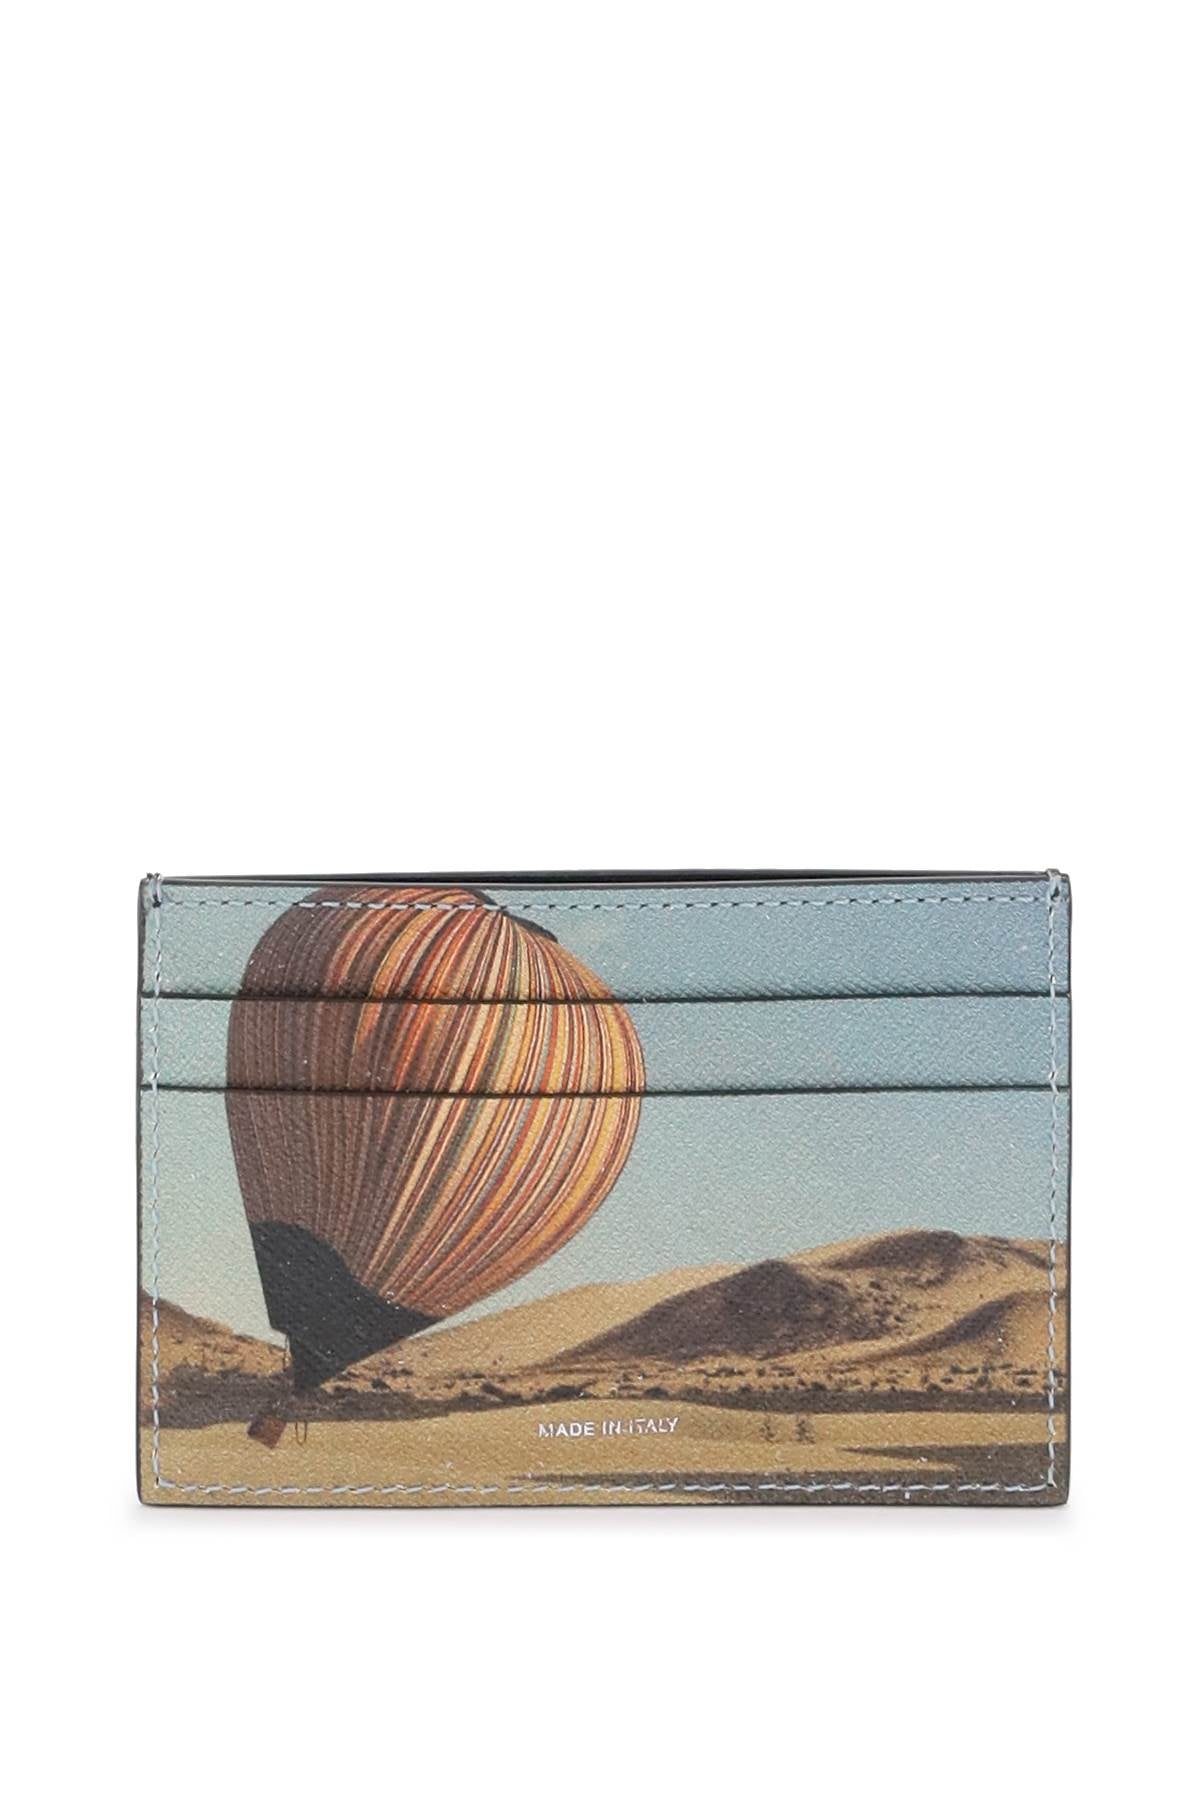 Paul smith signature stripe balloon card holder-0